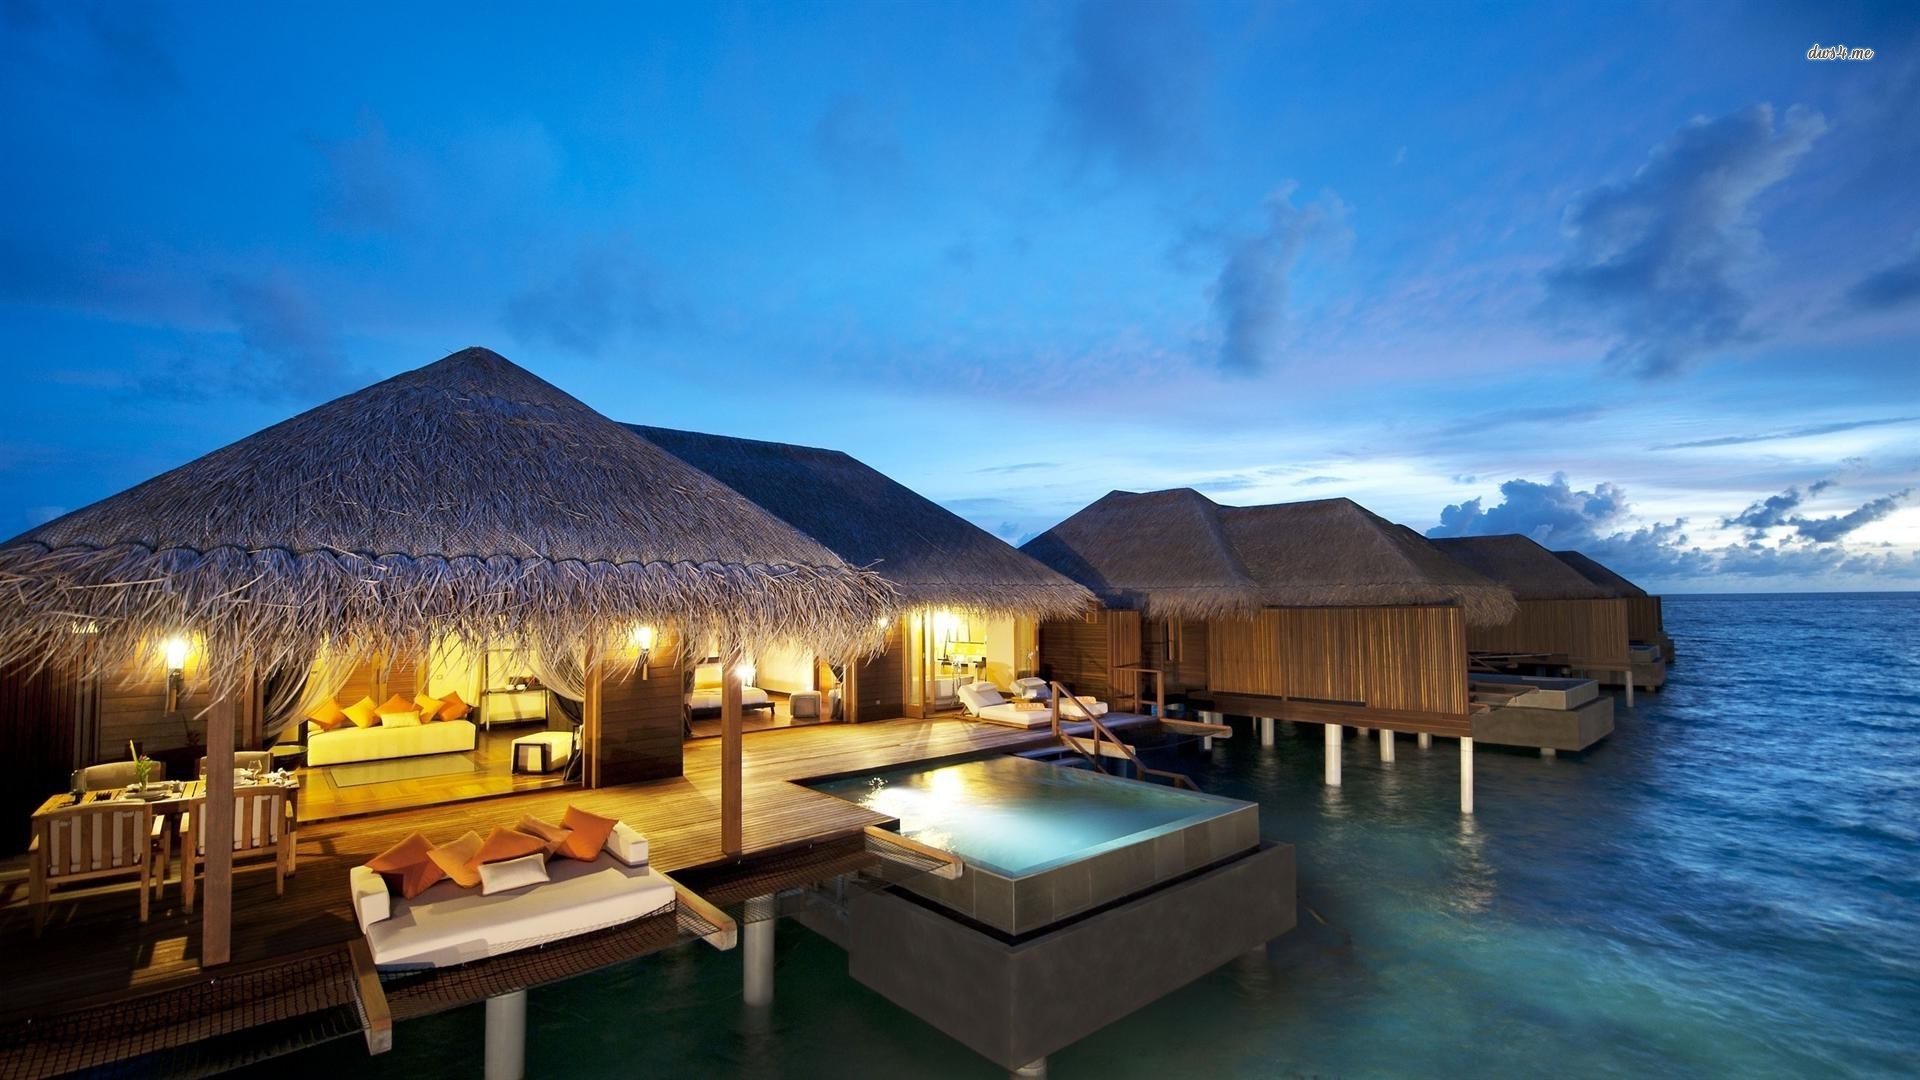 ayada resort maldives Desktop Backgrounds for Free HD Wallpaper